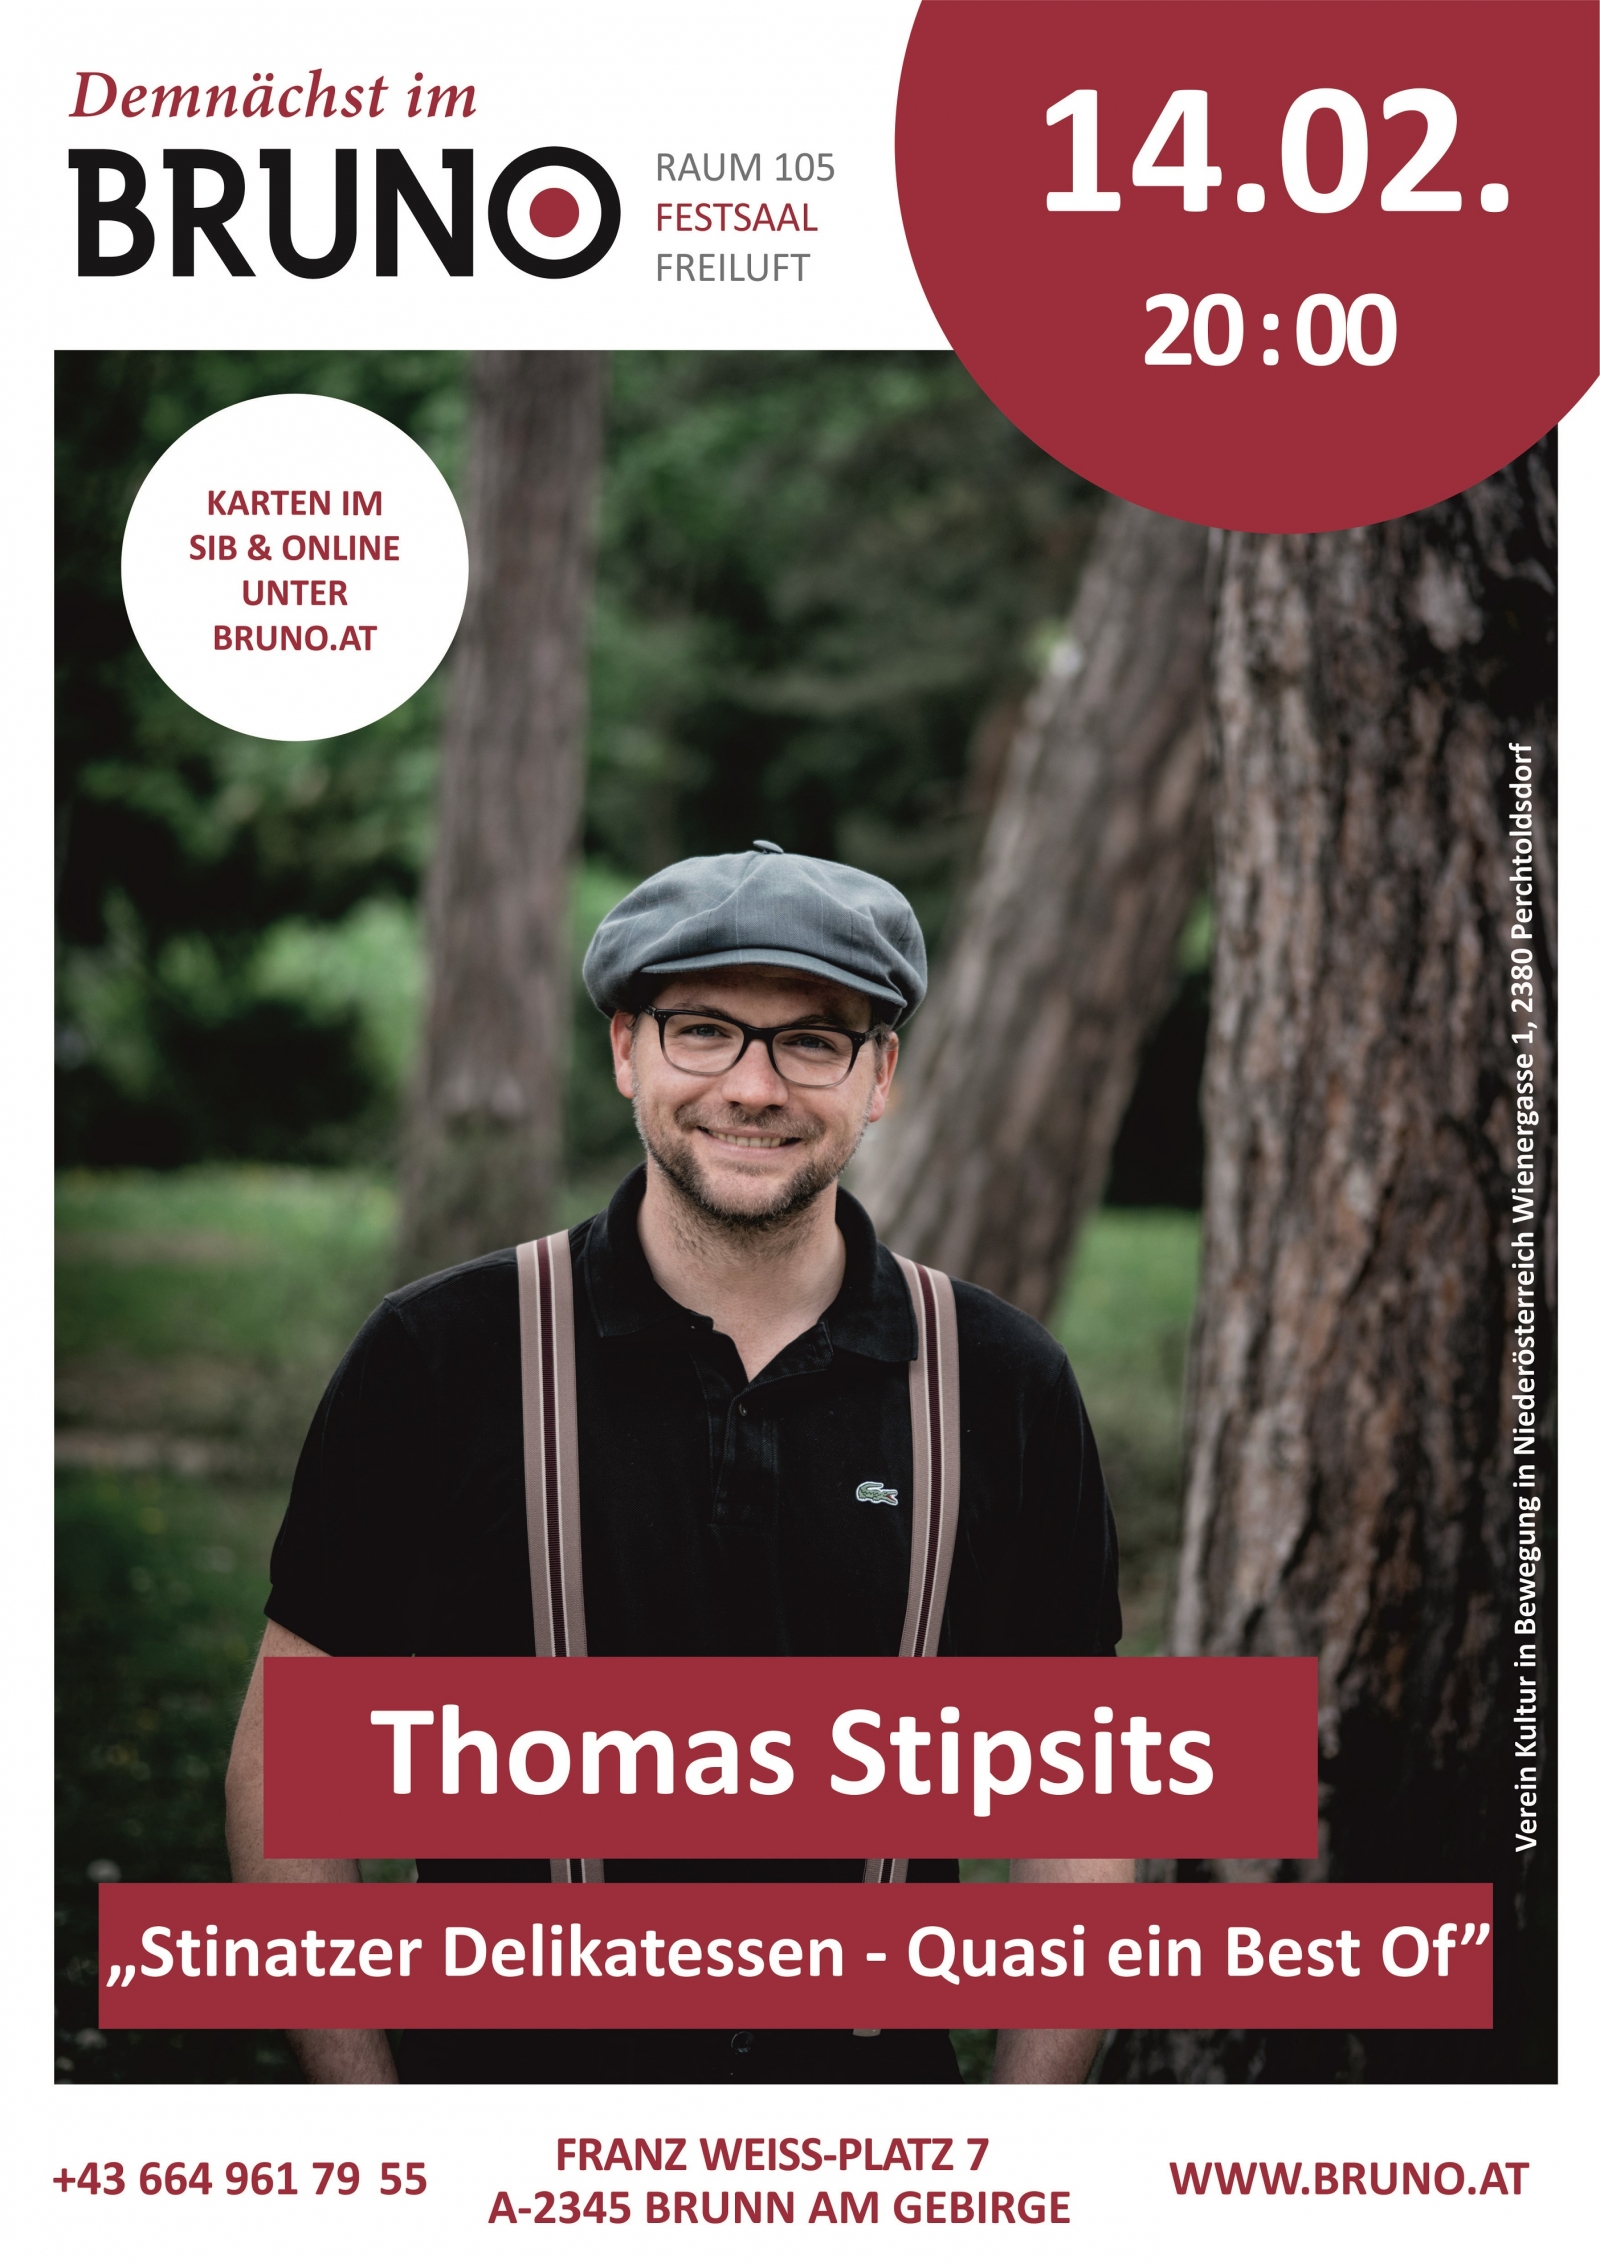 Thomas Stipsits - Stinatzer Delikatessen - Quasi ein Best Of